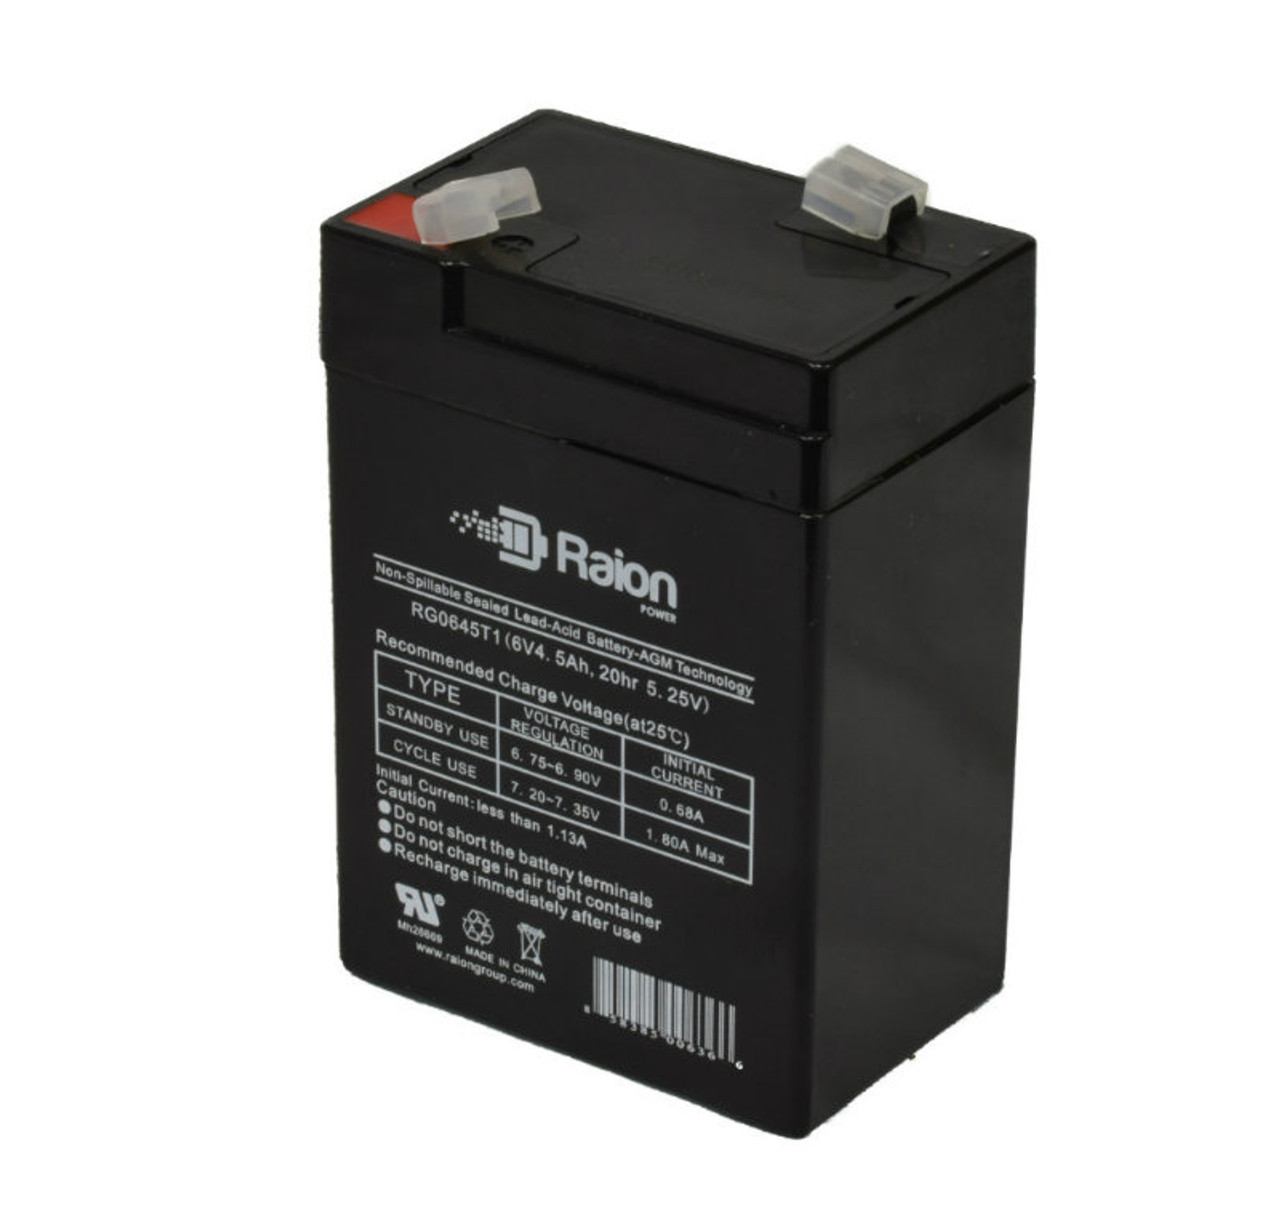 Raion Power RG0645T1 6V 4.5Ah Replacement Battery Cartridge for Nair NR6-5E